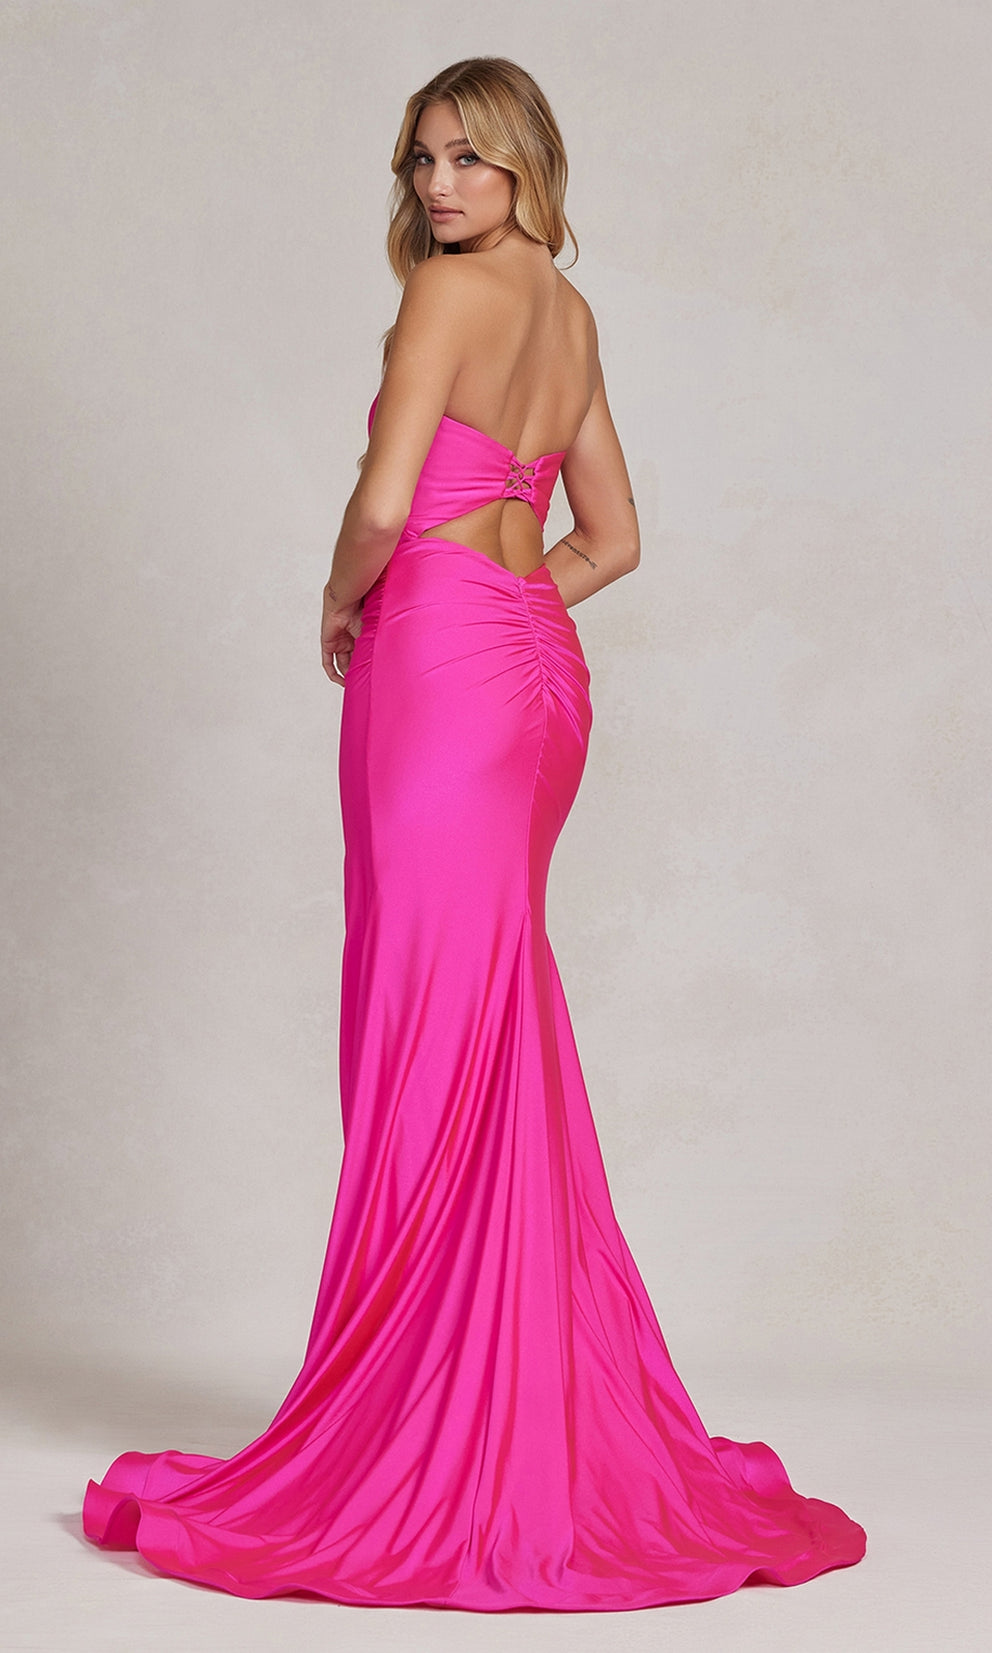 SHLIOH Fuchsia Hot Pink Strapless Bum Scrunch Corset Back Prom & Formal Dress